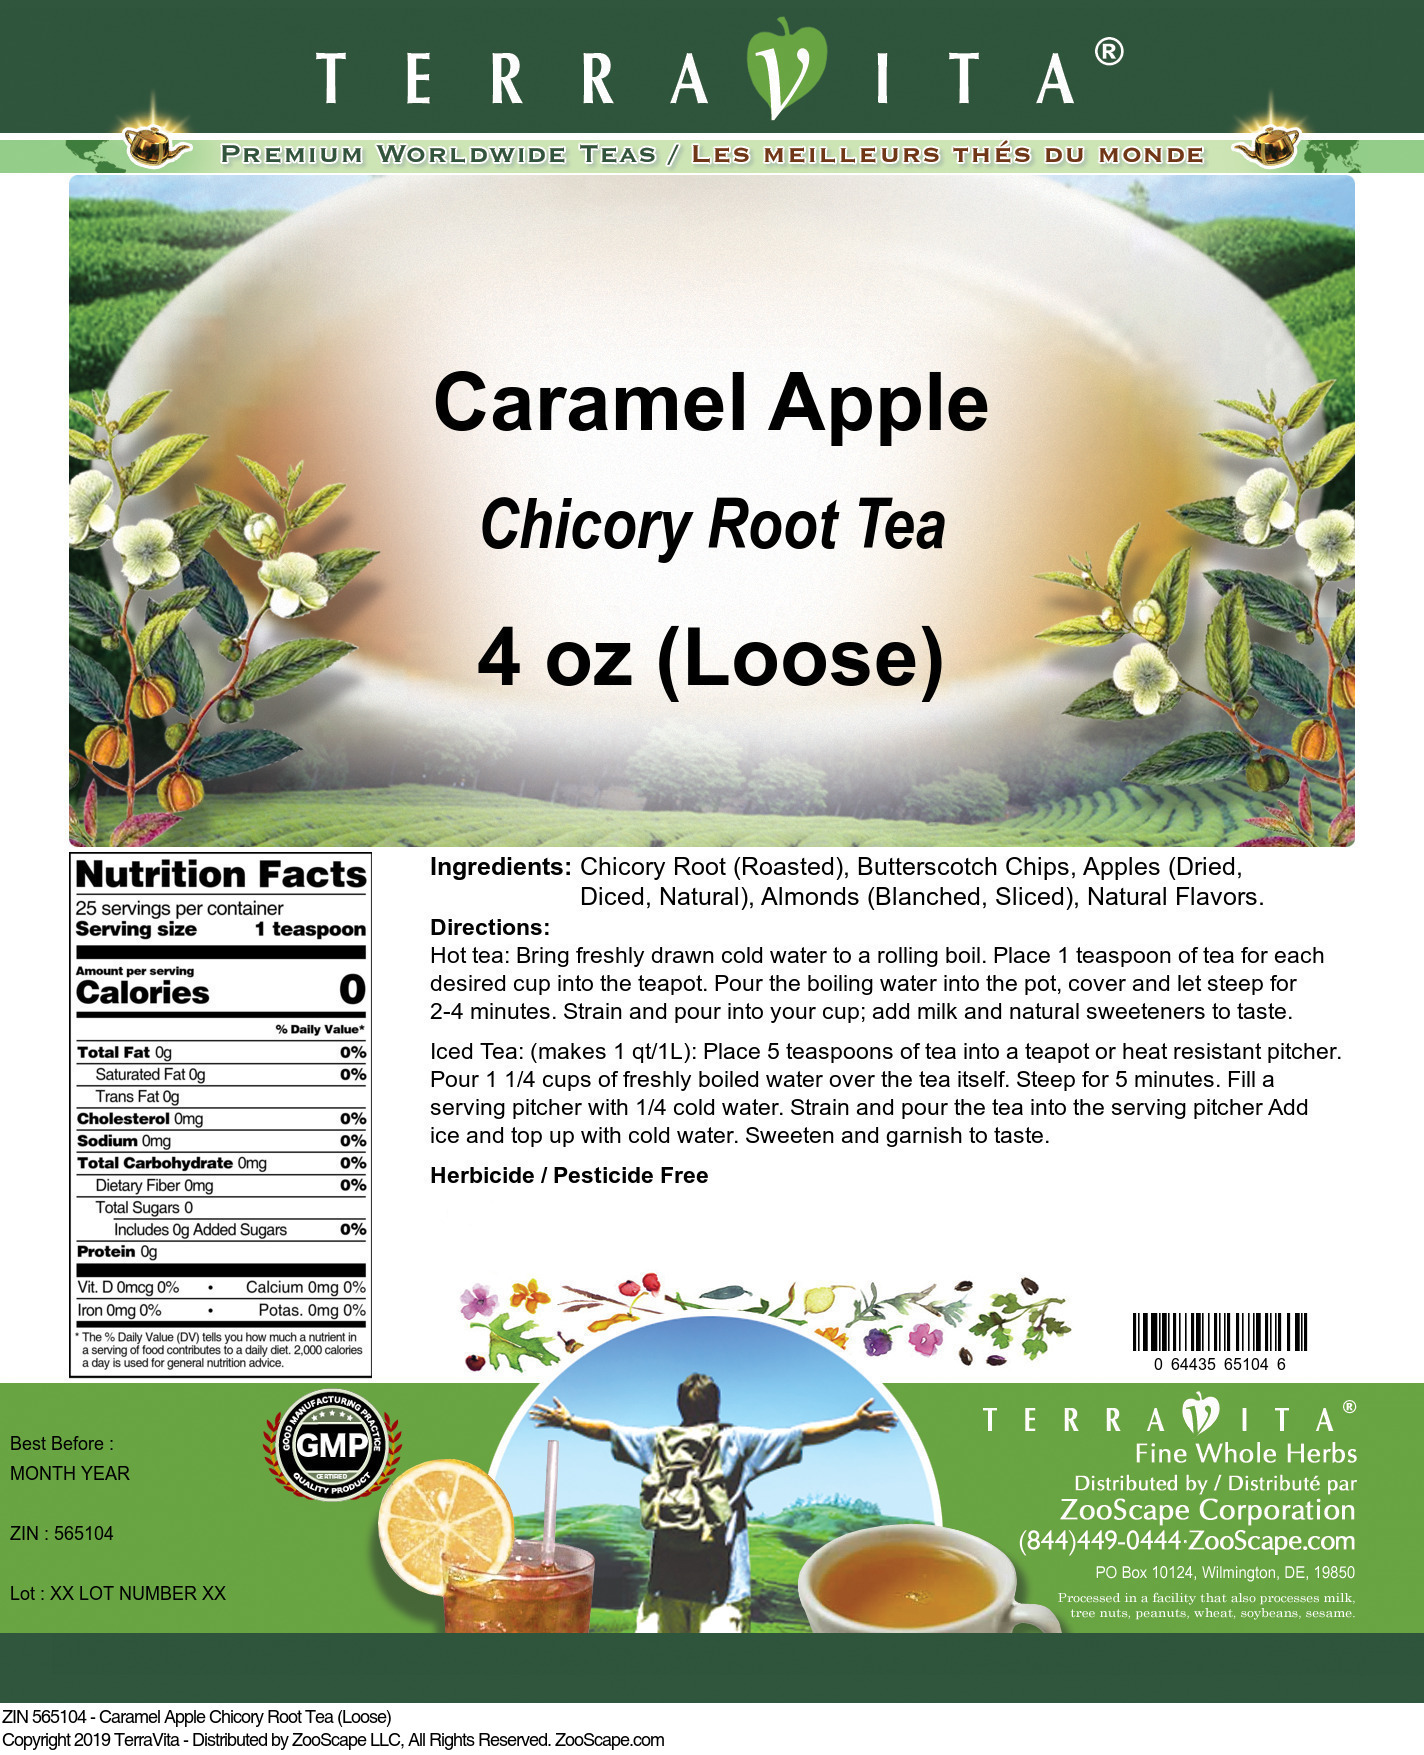 Caramel Apple Chicory Root Tea (Loose) - Label